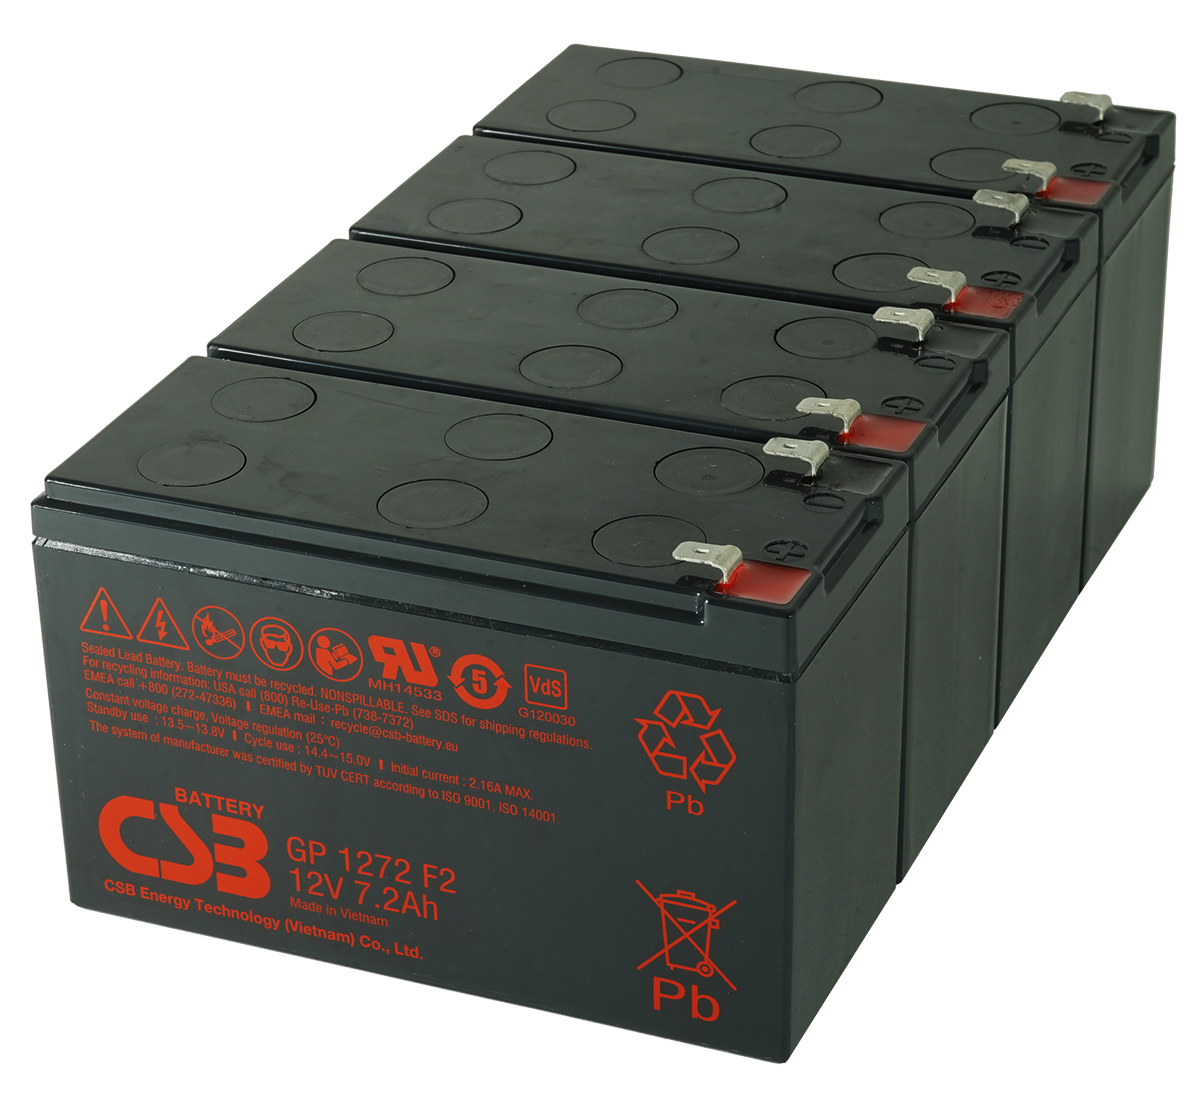 MDS68763 UPS Battery Kit for MGE / Eaton UPS